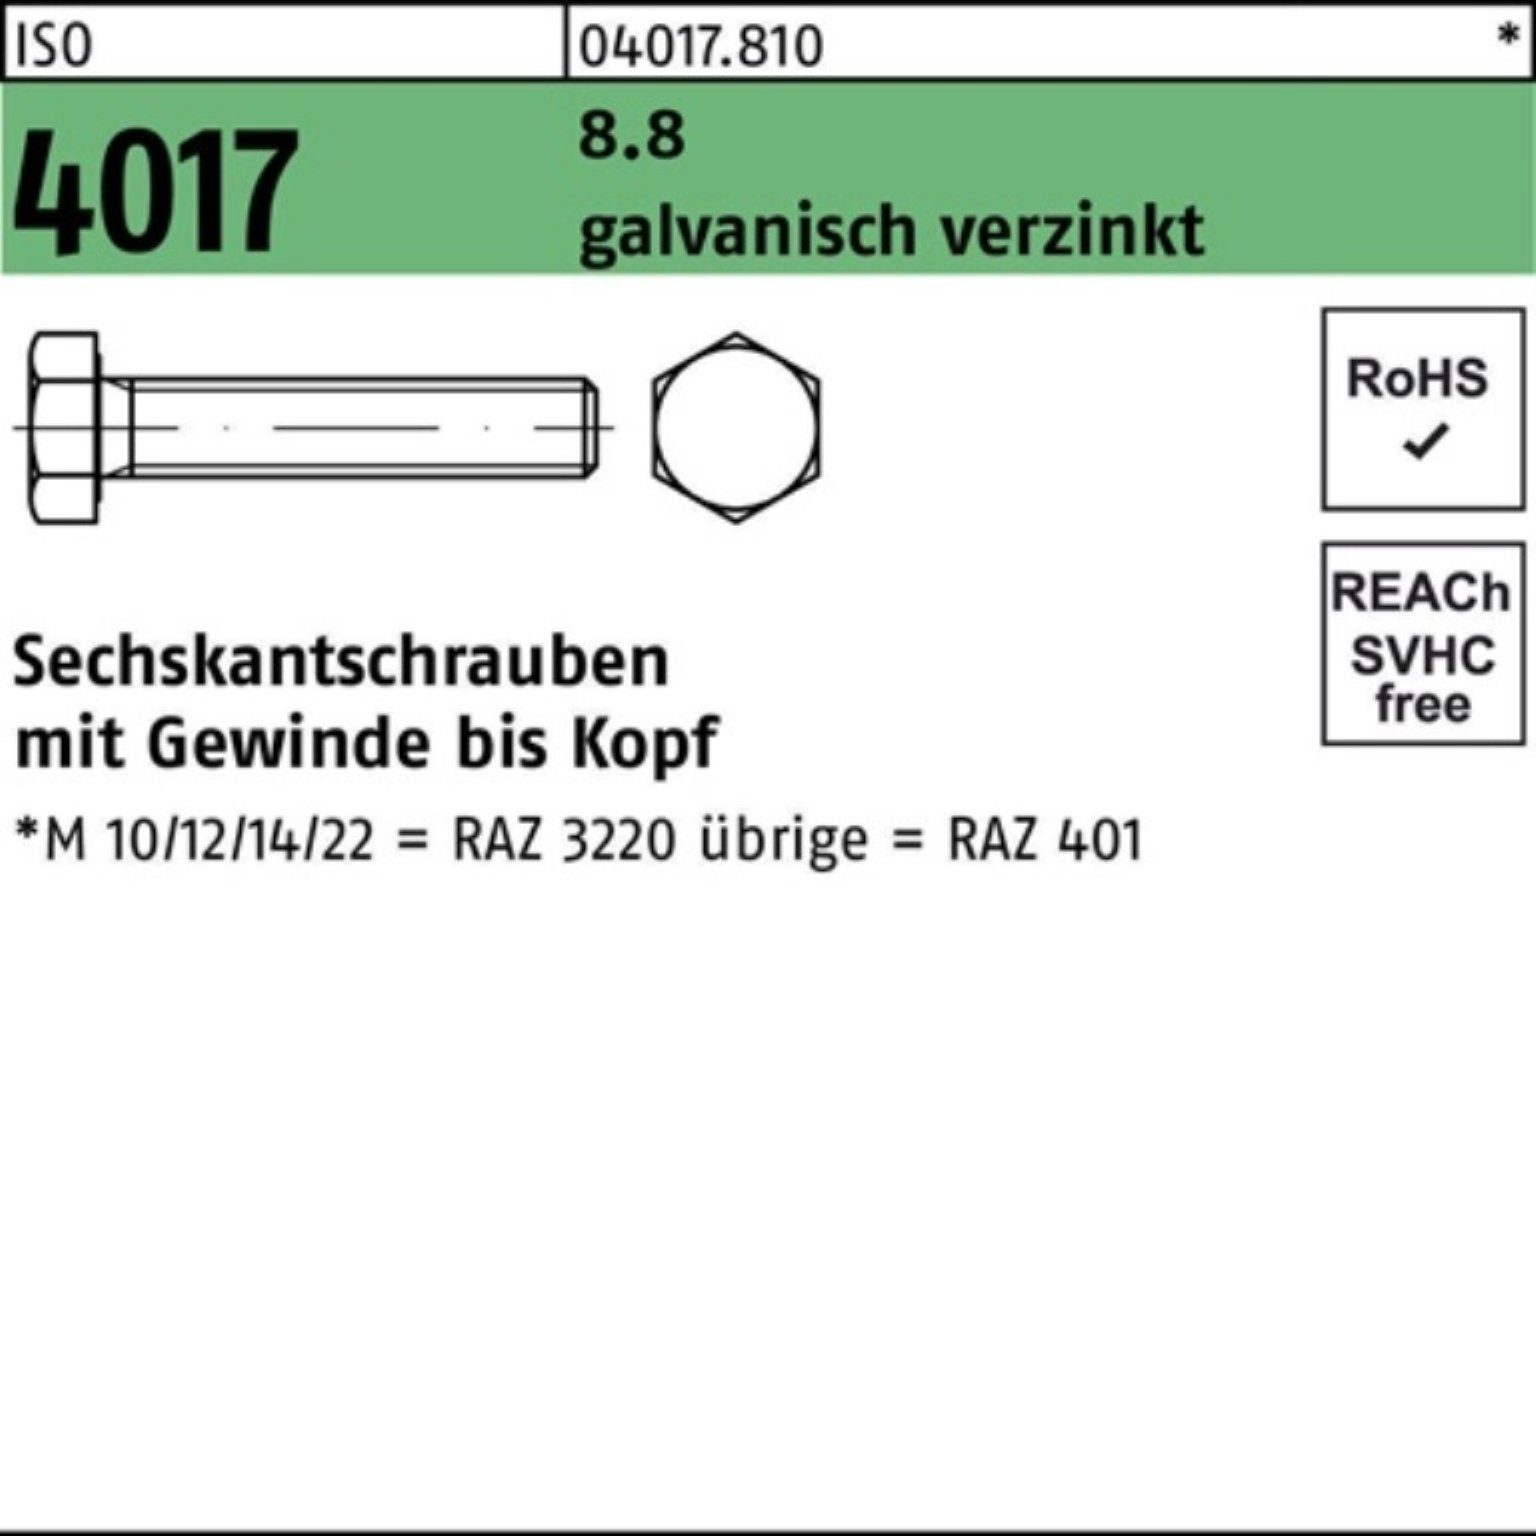 Bufab Sechskantschraube 200er Pack Sechskantschraube 8.8 St VG galv.verz. 4017 50 ISO 200 M8x